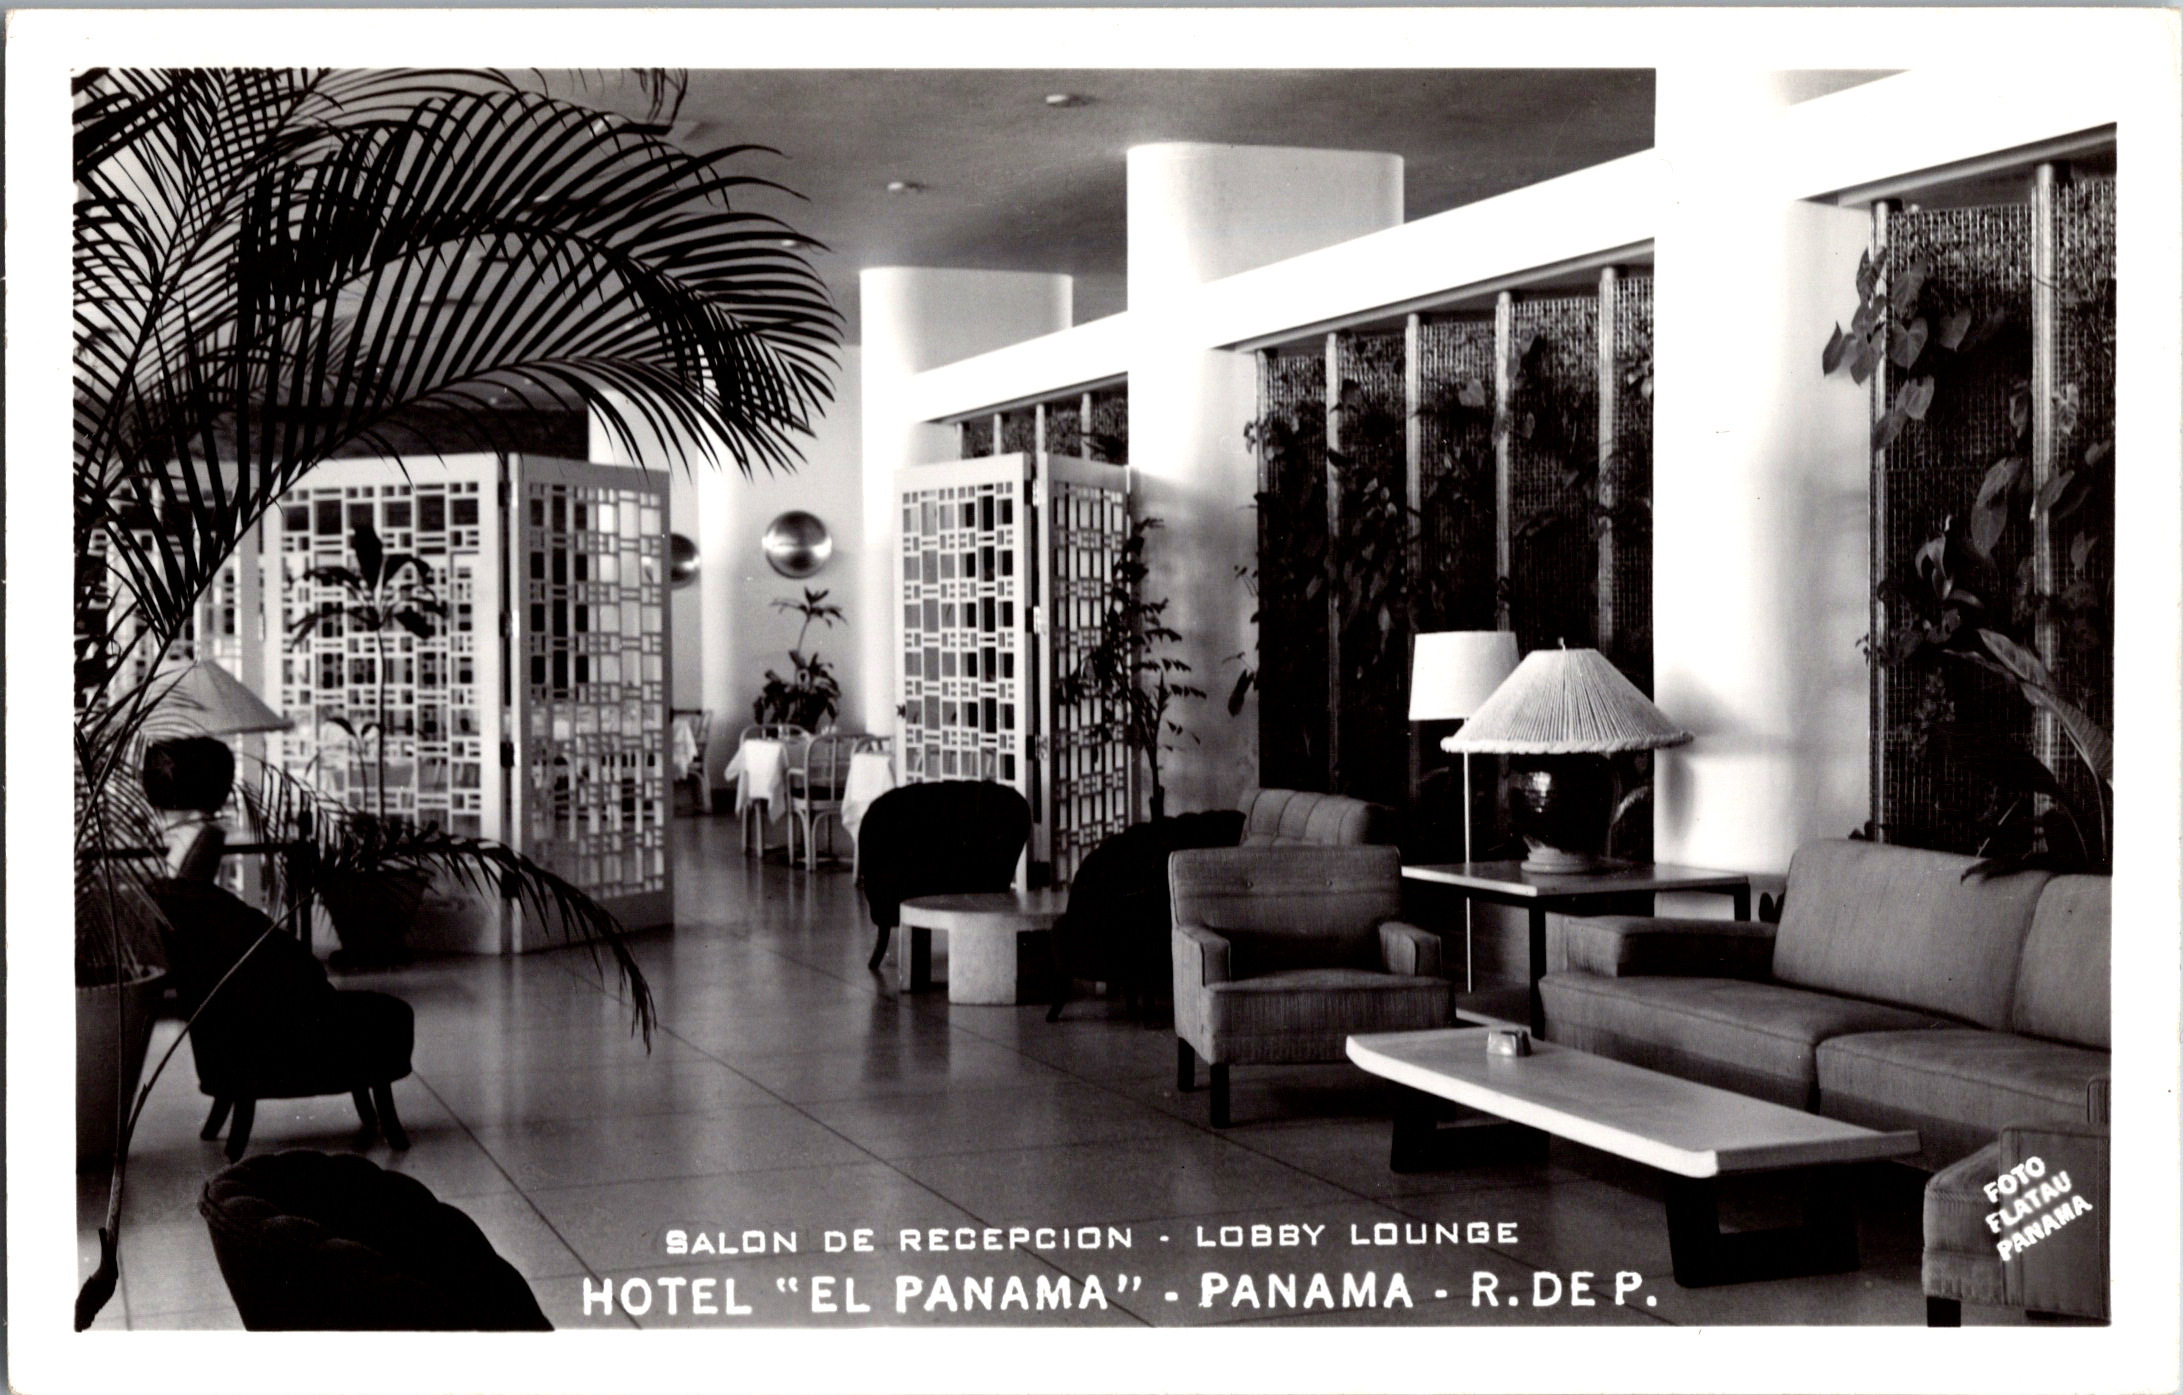 Photo of the lobby of the El Panama